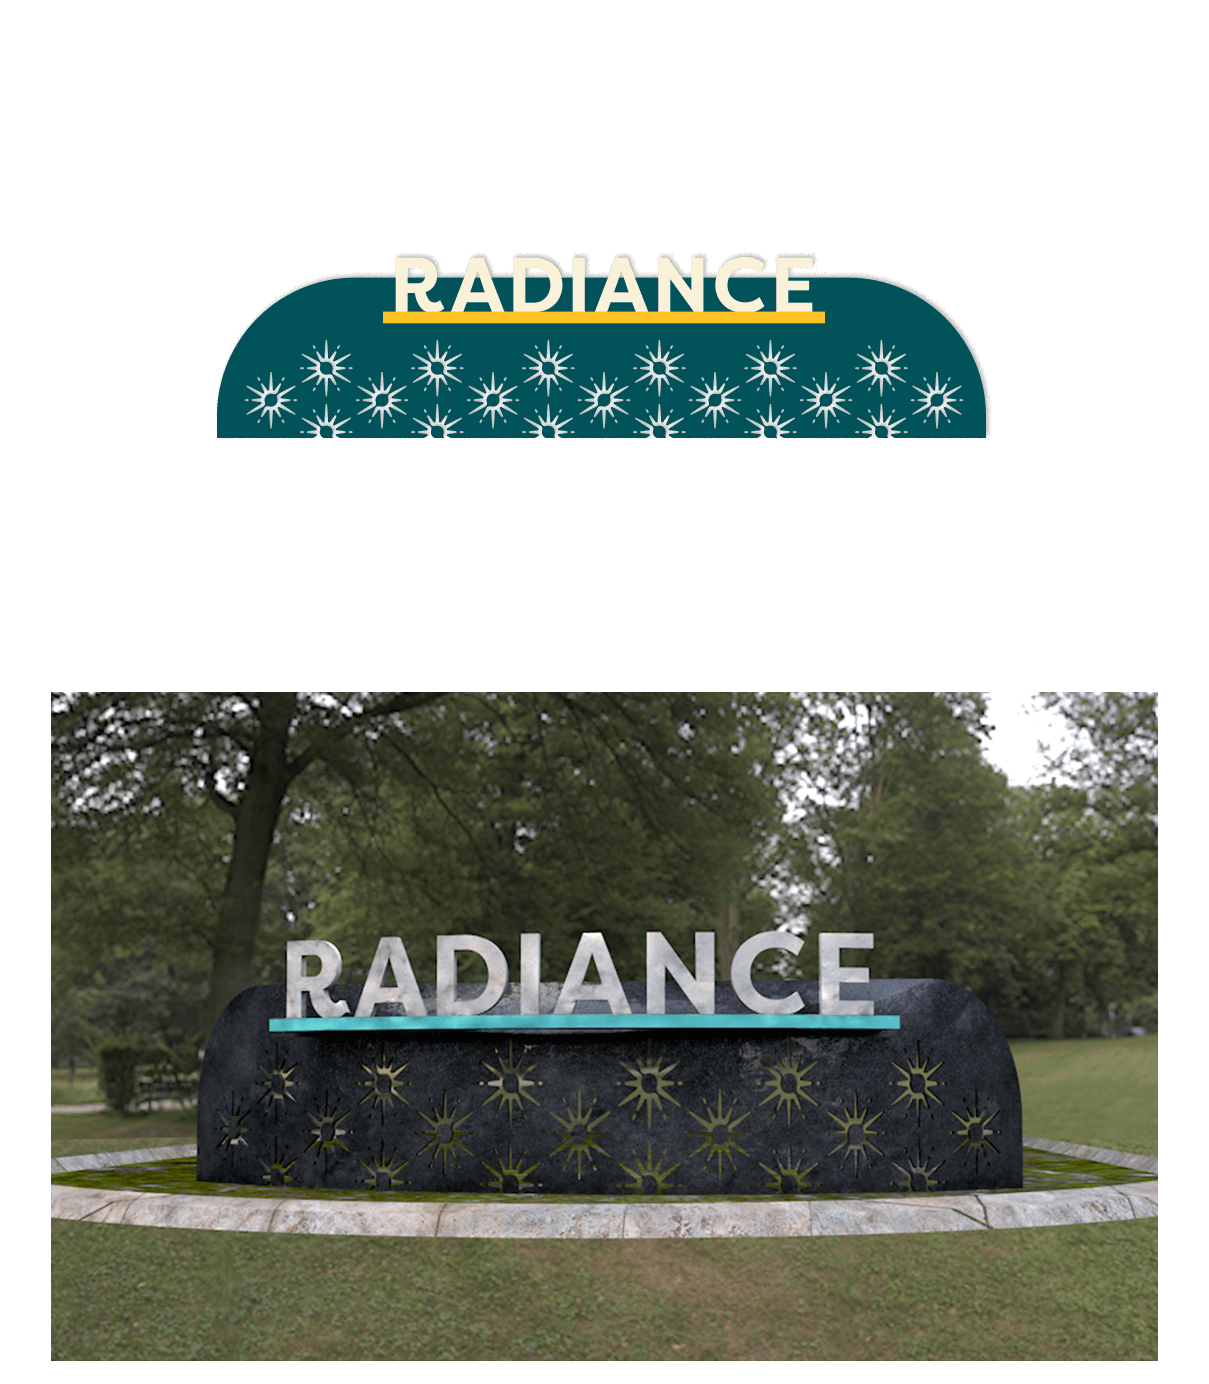 Radiance Jubilee monument sign design option 1